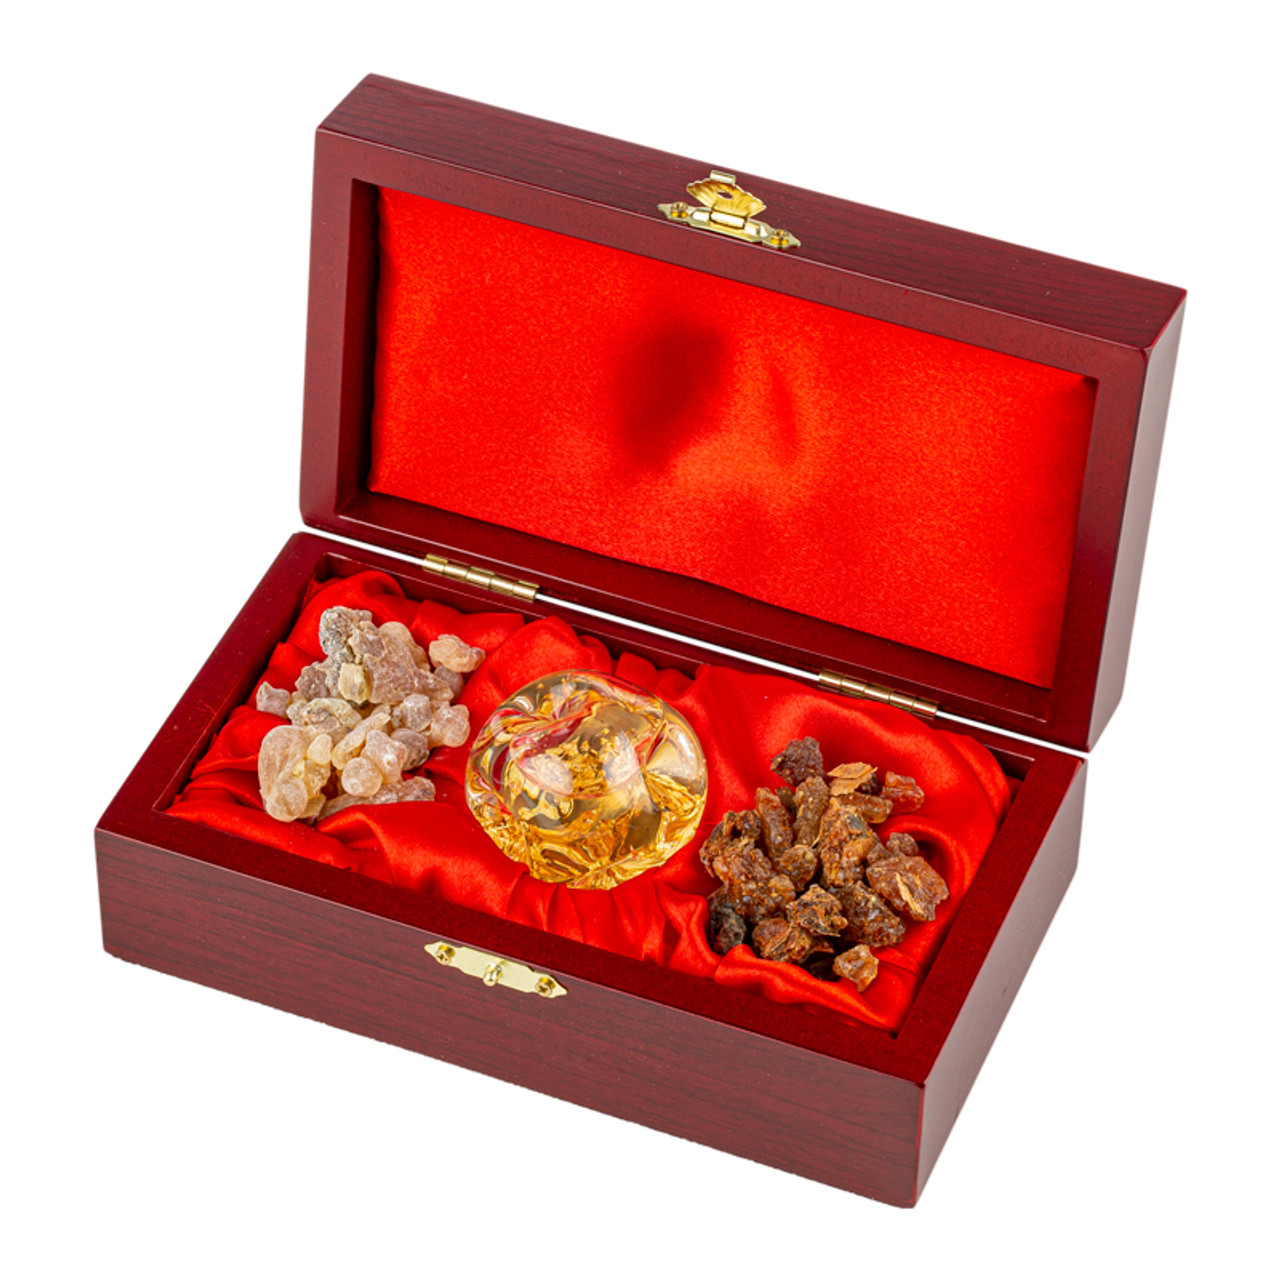 Frankincense, Gold & Myrrh Wooden Box Set